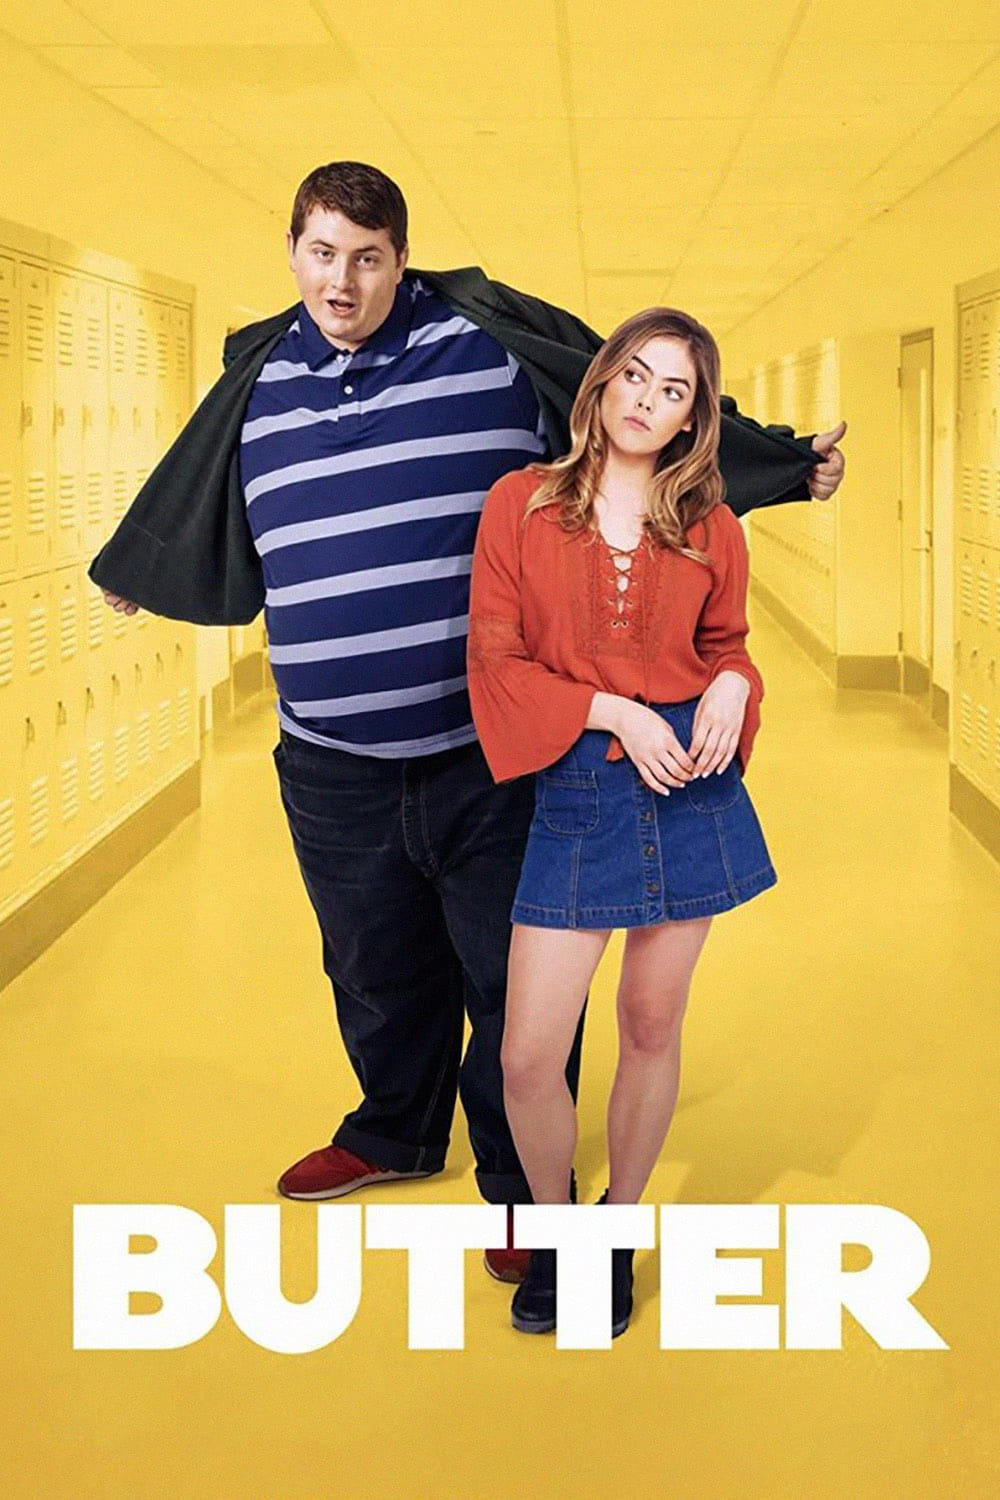 Butter's Final Meal film